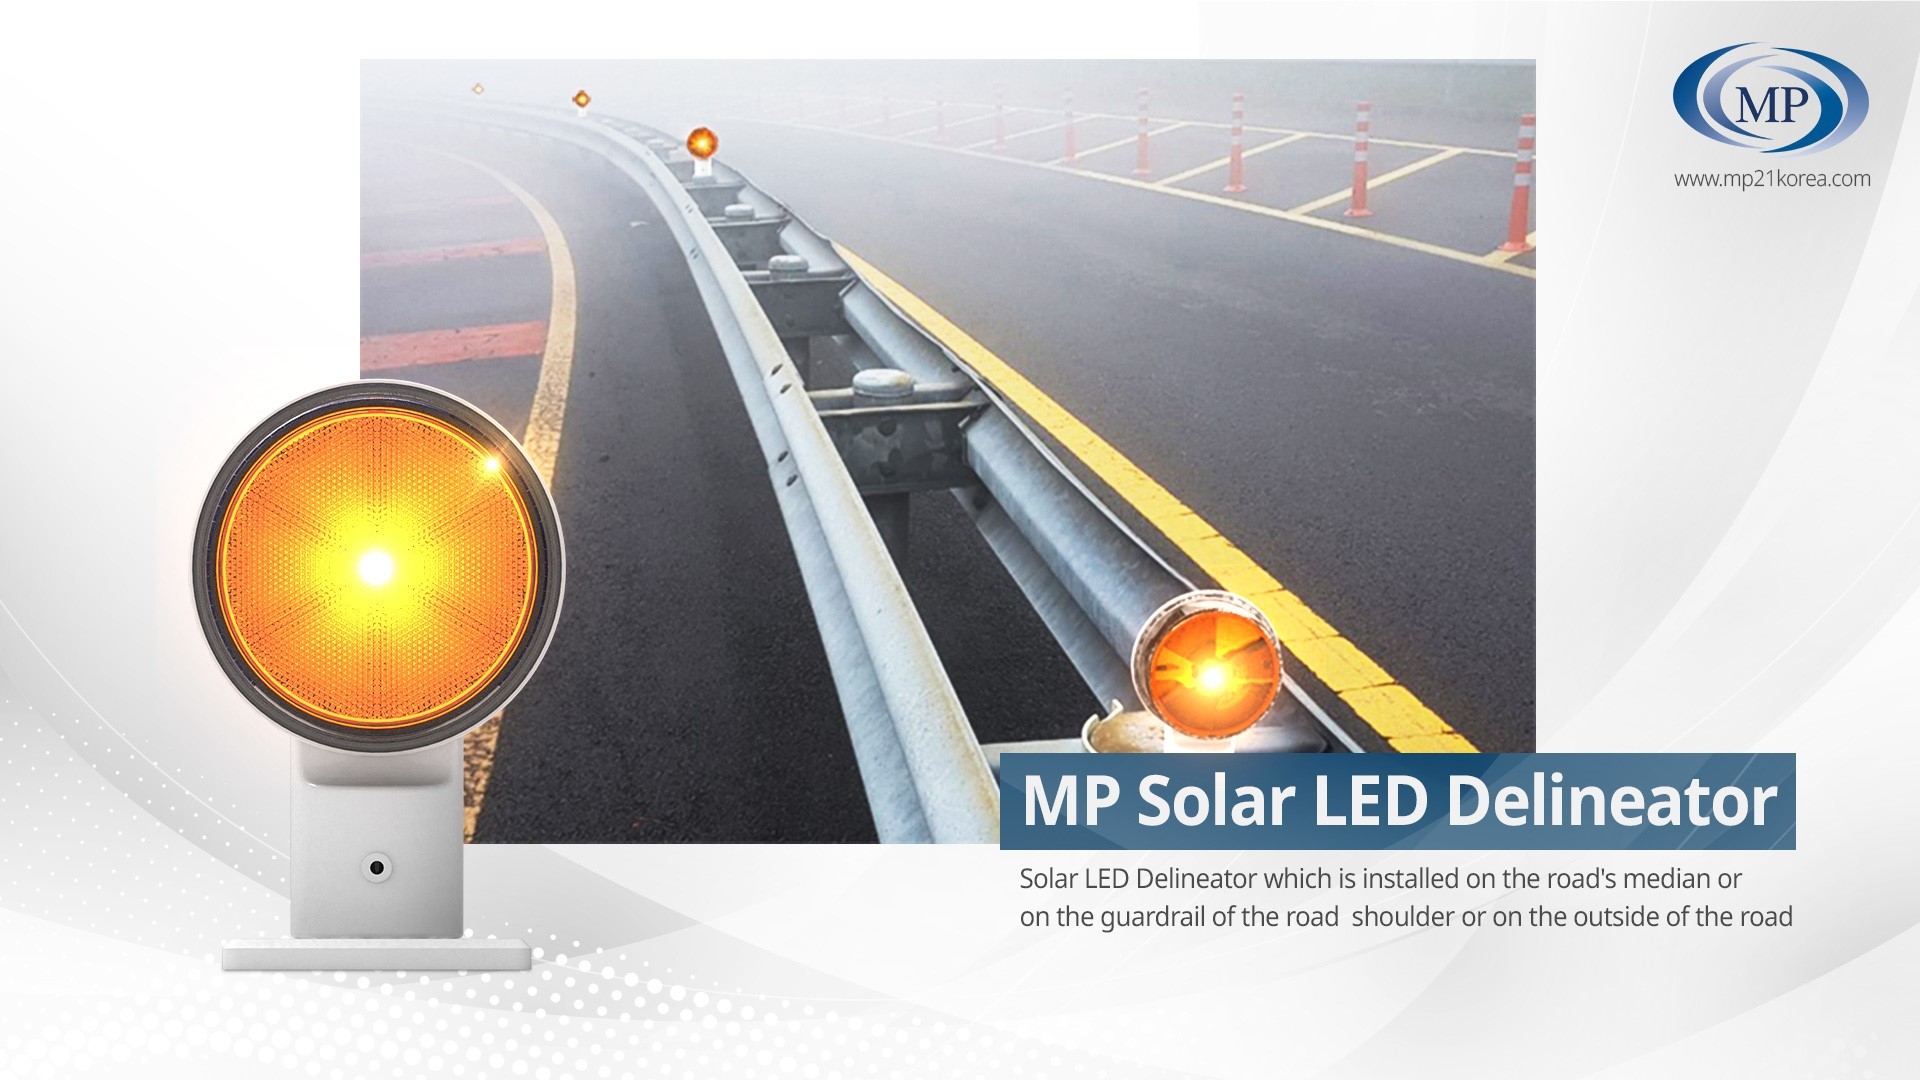 Solar LED Road Safety products / Solar(optional) LED Crosswalk Floor-installing Traffic Signal